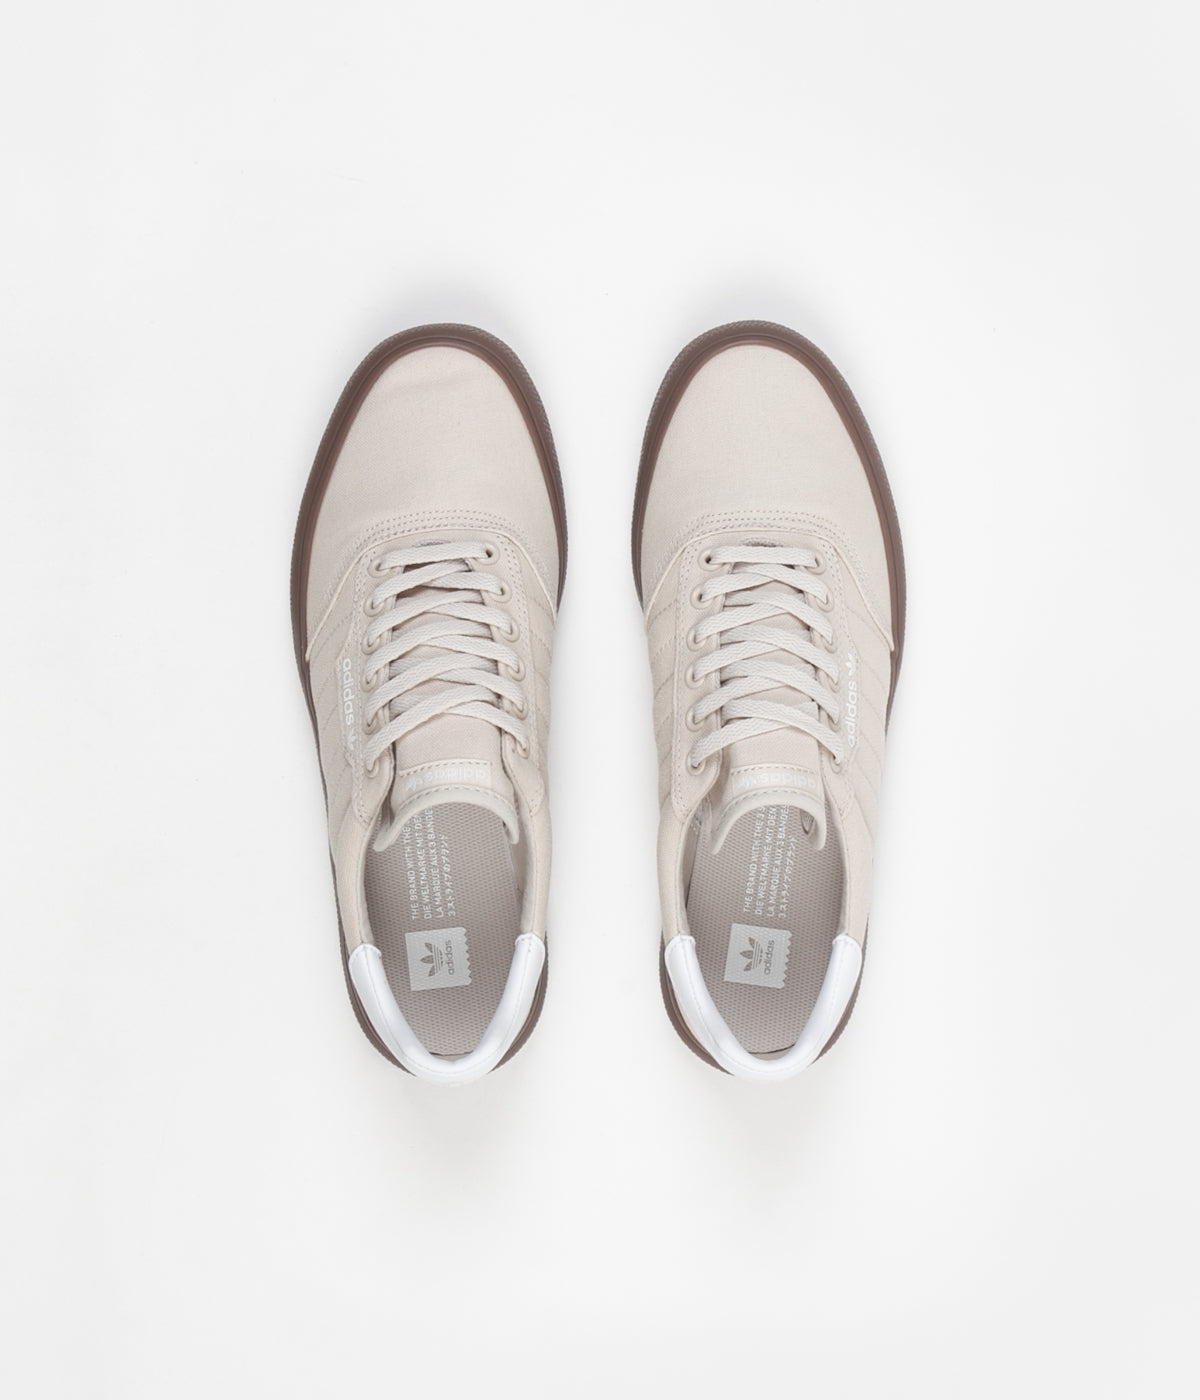 Adidas 3MC Shoes - Clear Brown / White 